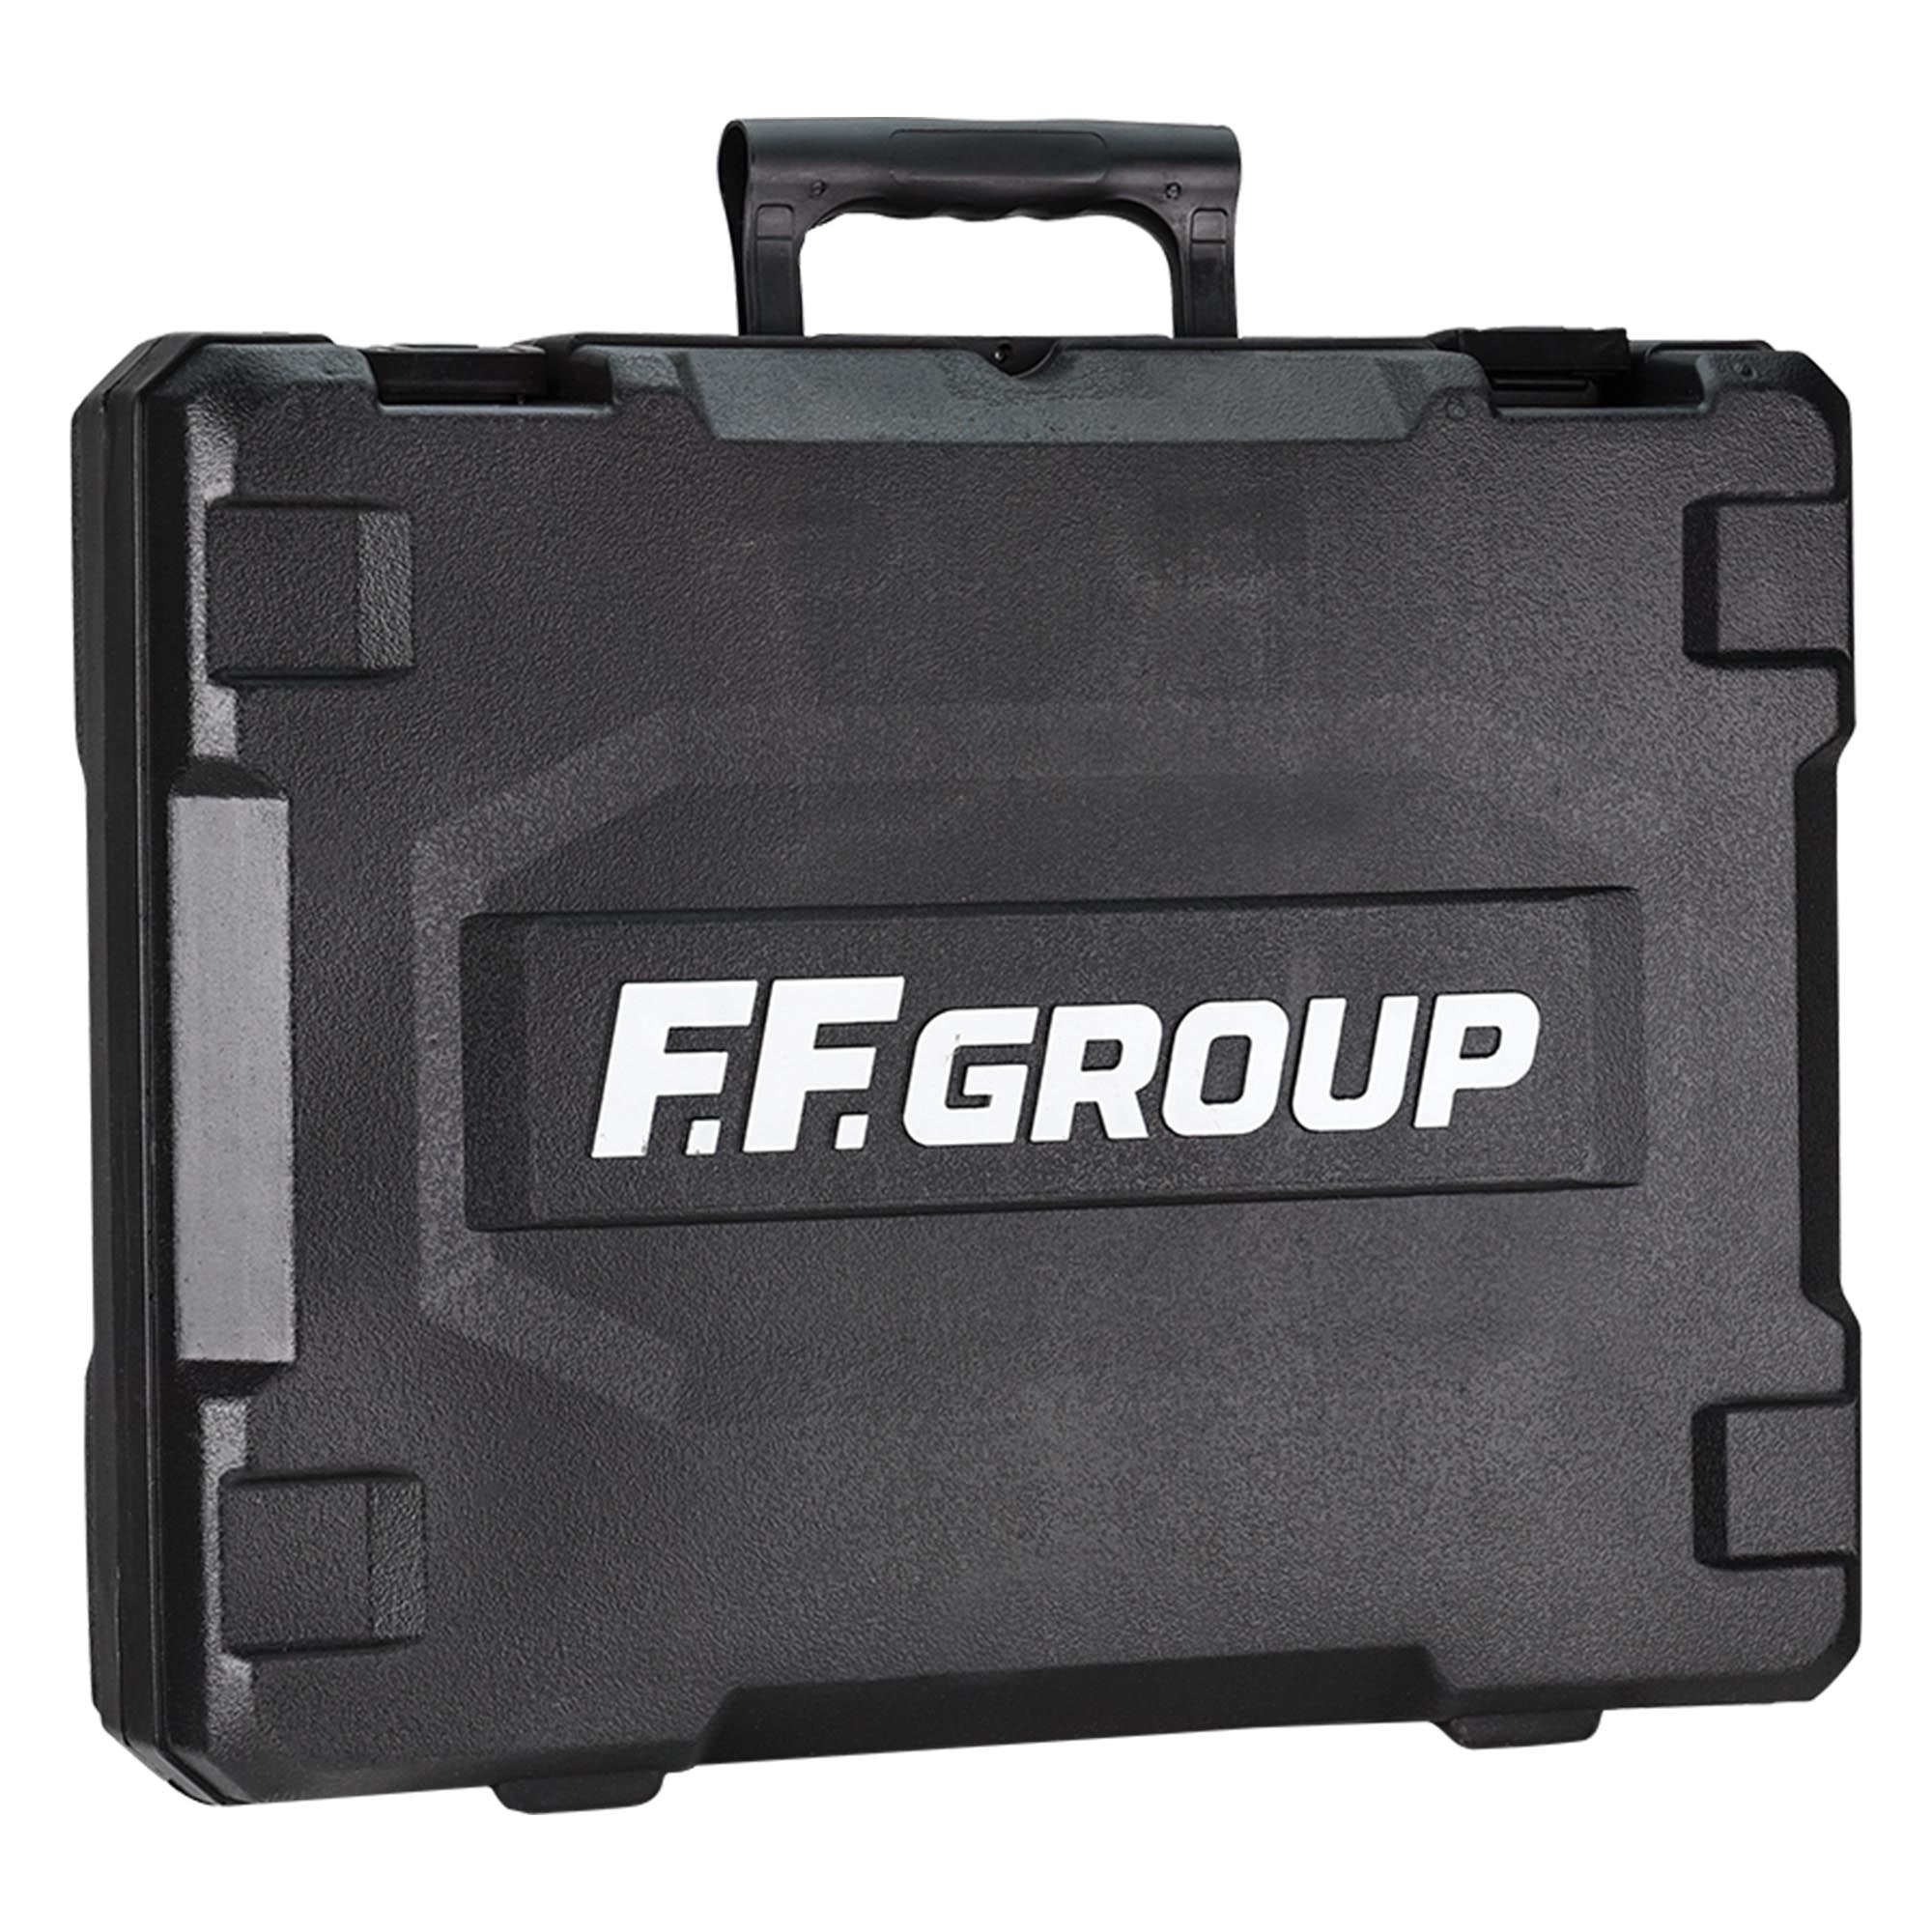 Tassellatore FFgroup RH 2-26 PLUS 850W